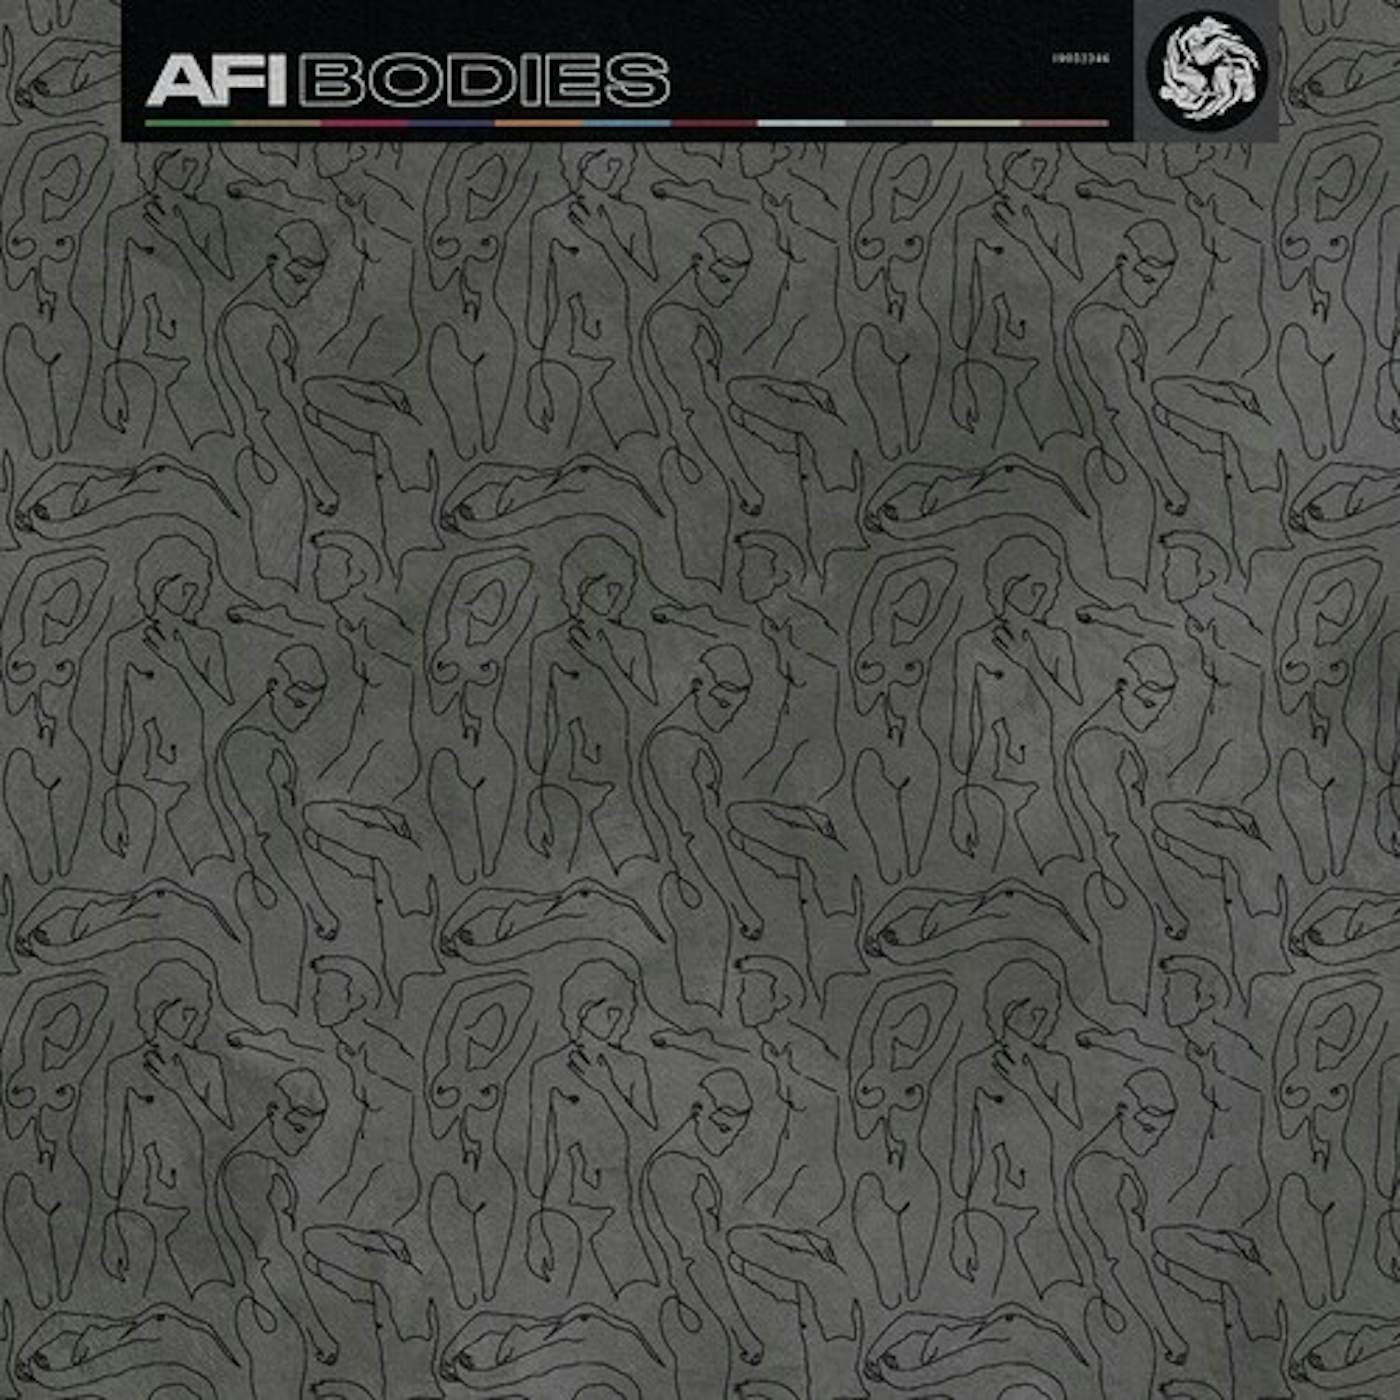 AFI Bodies Vinyl Record